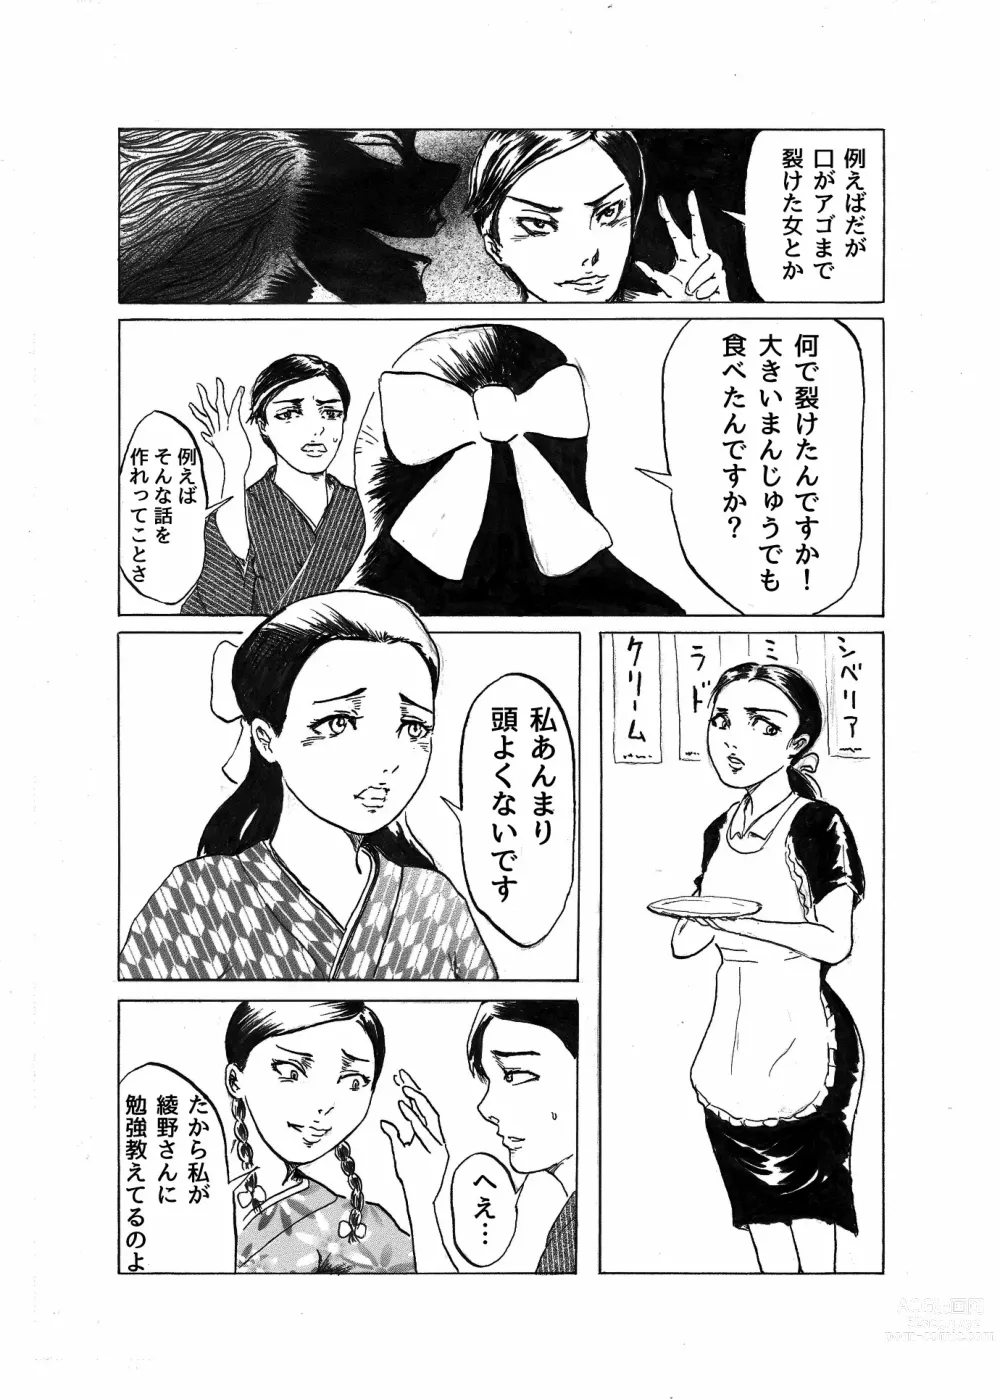 Page 9 of doujinshi Kai Oni